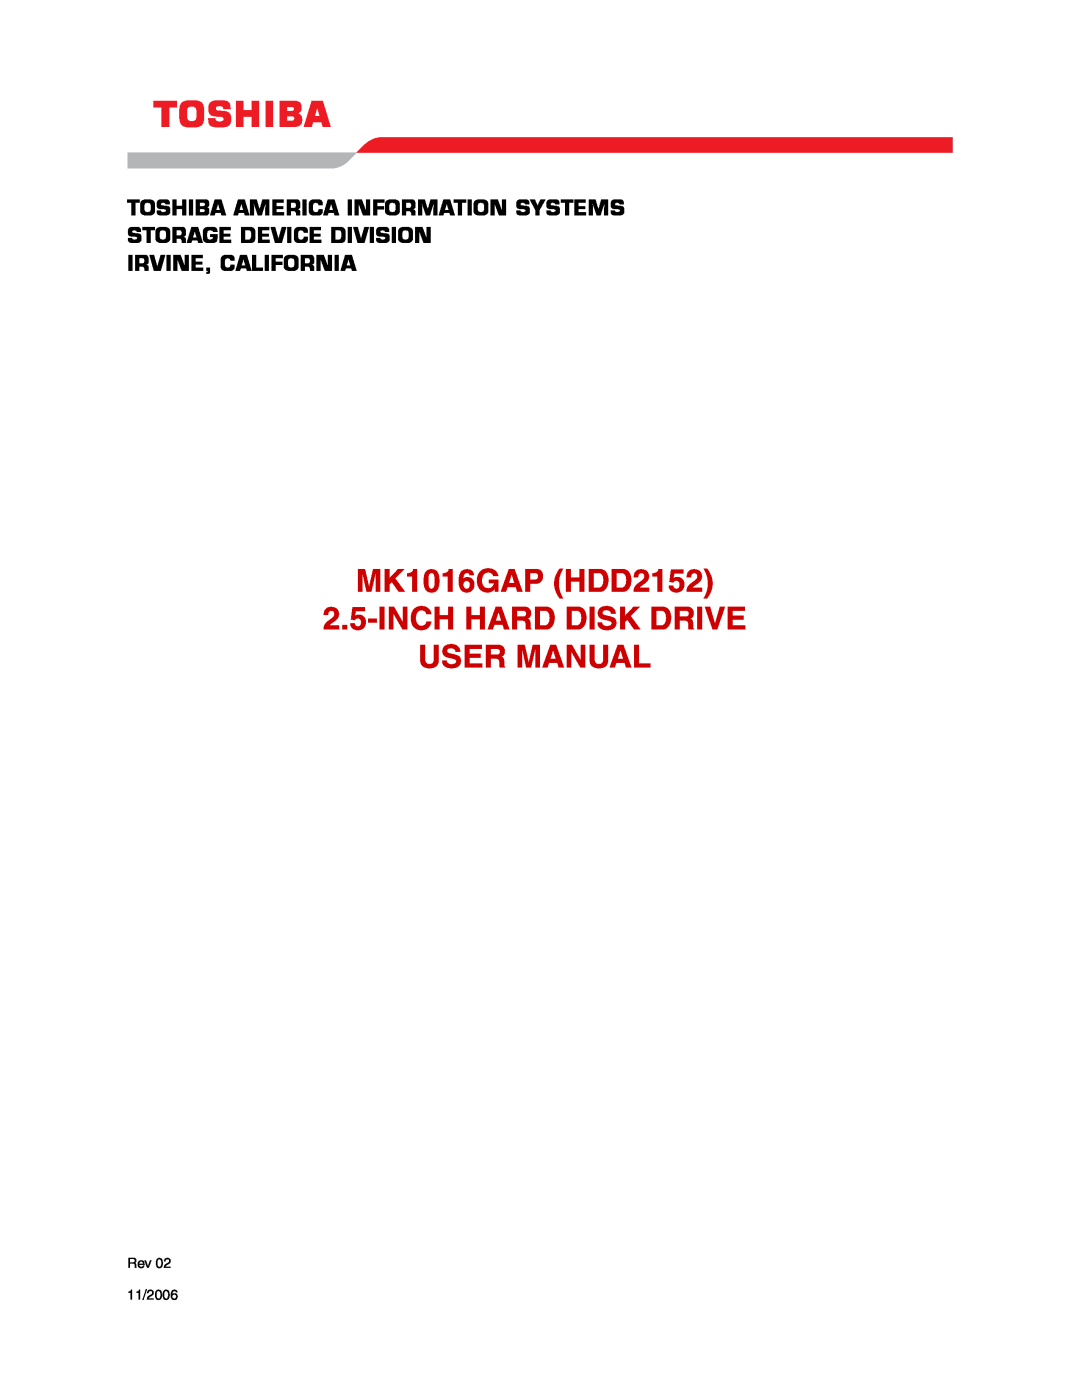 Toshiba user manual MK1016GAP HDD2152 2.5-INCH HARD DISK DRIVE USER MANUAL, Irvine, California, Rev 11/2006 